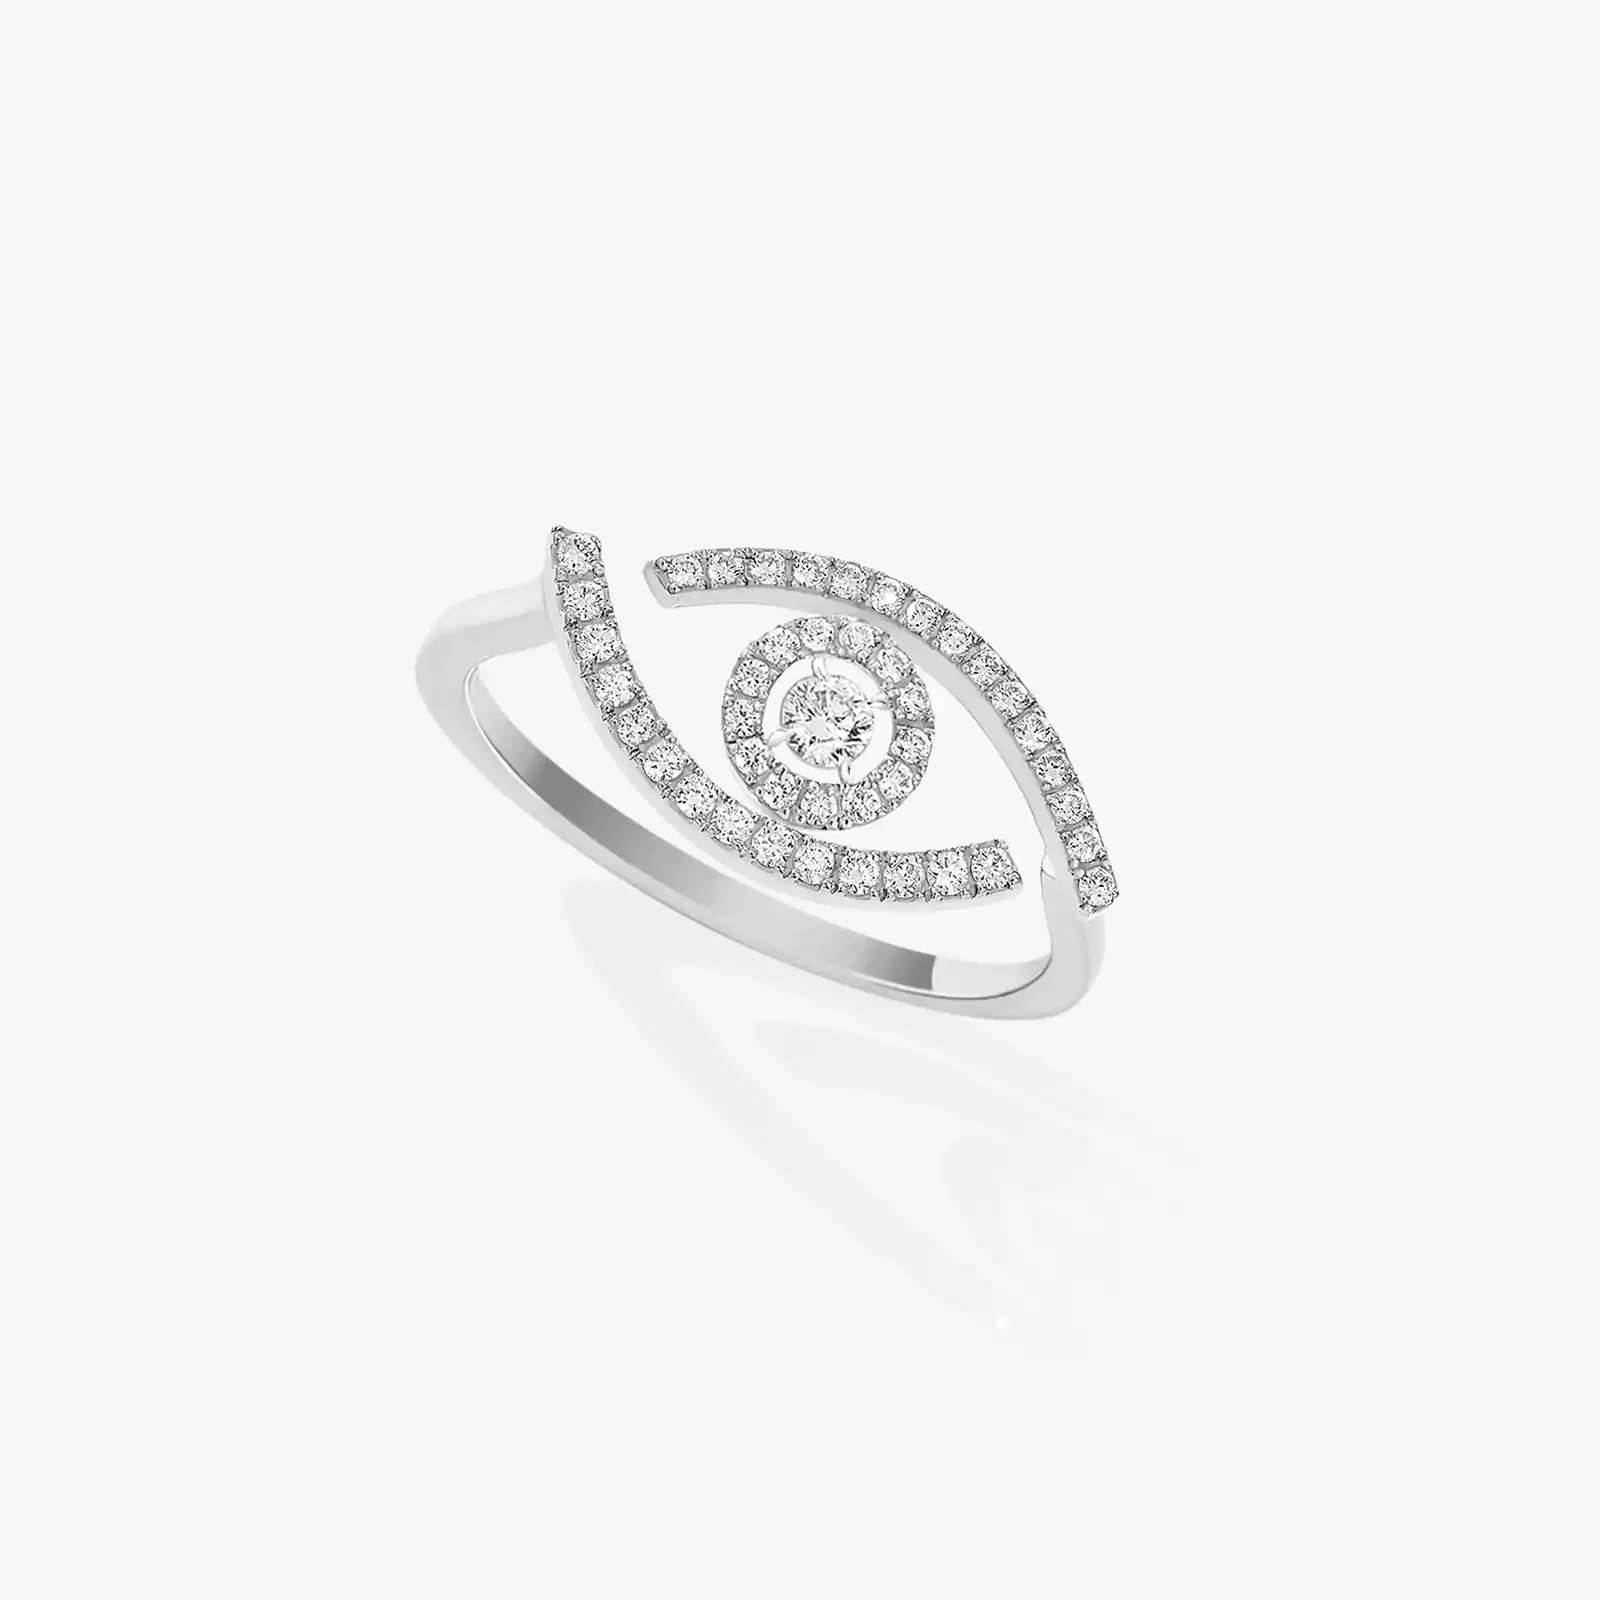 Bague Femme Or Blanc Diamant Lucky Eye Pavée 10037-WG